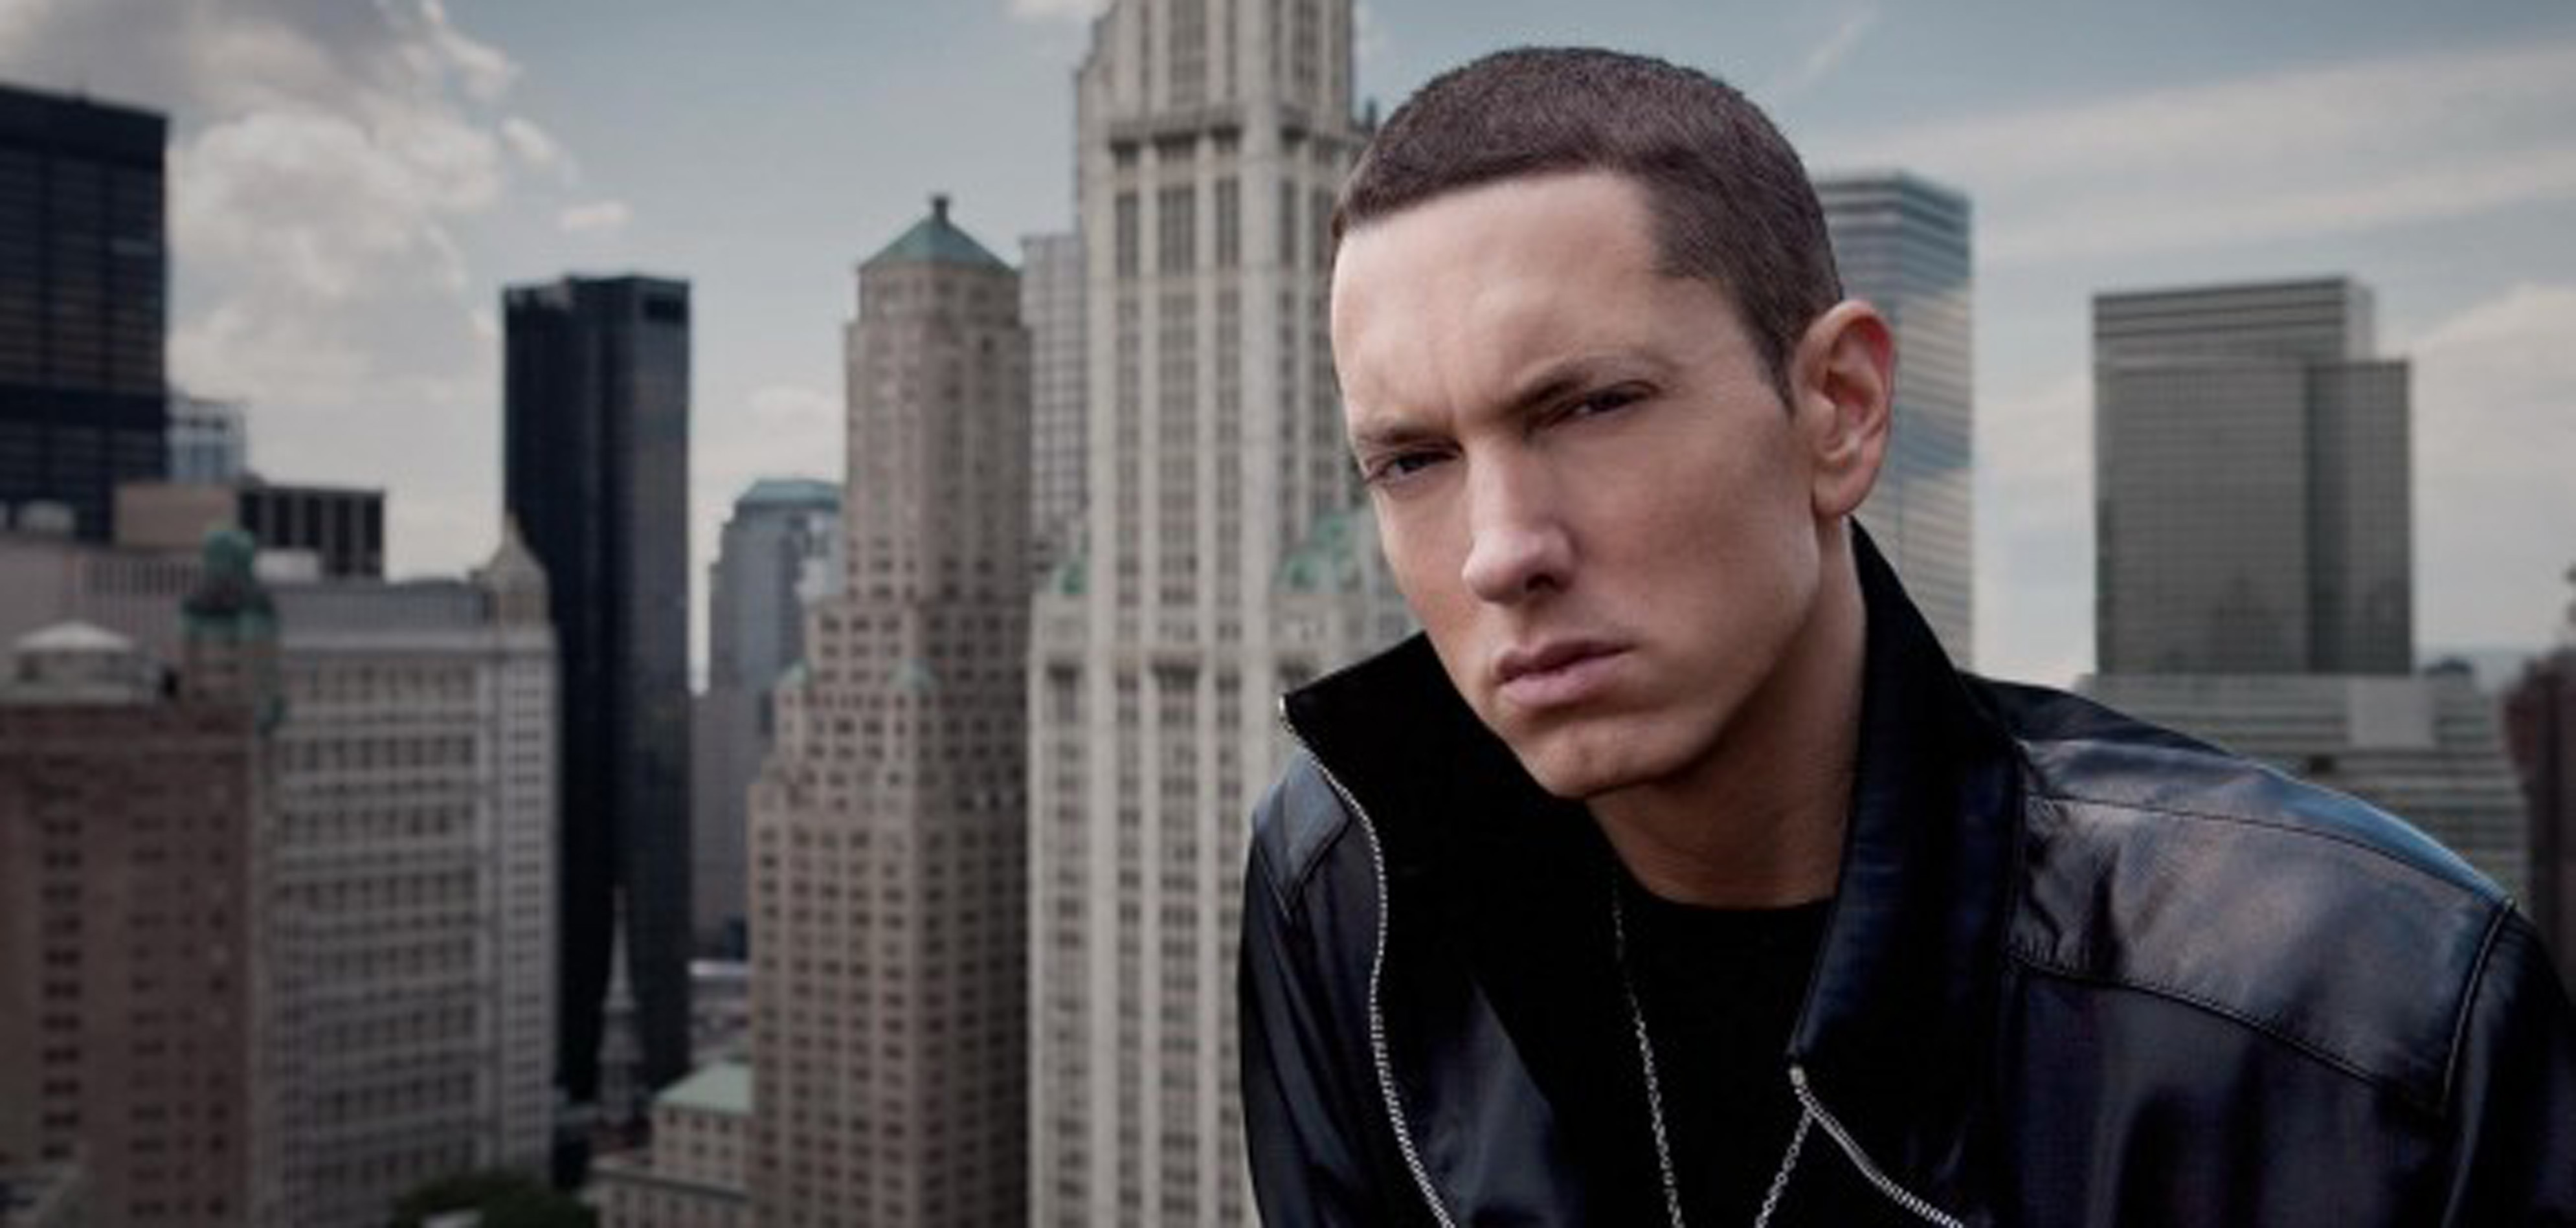 Eminem reinvents himself again with new album | The Villanovan